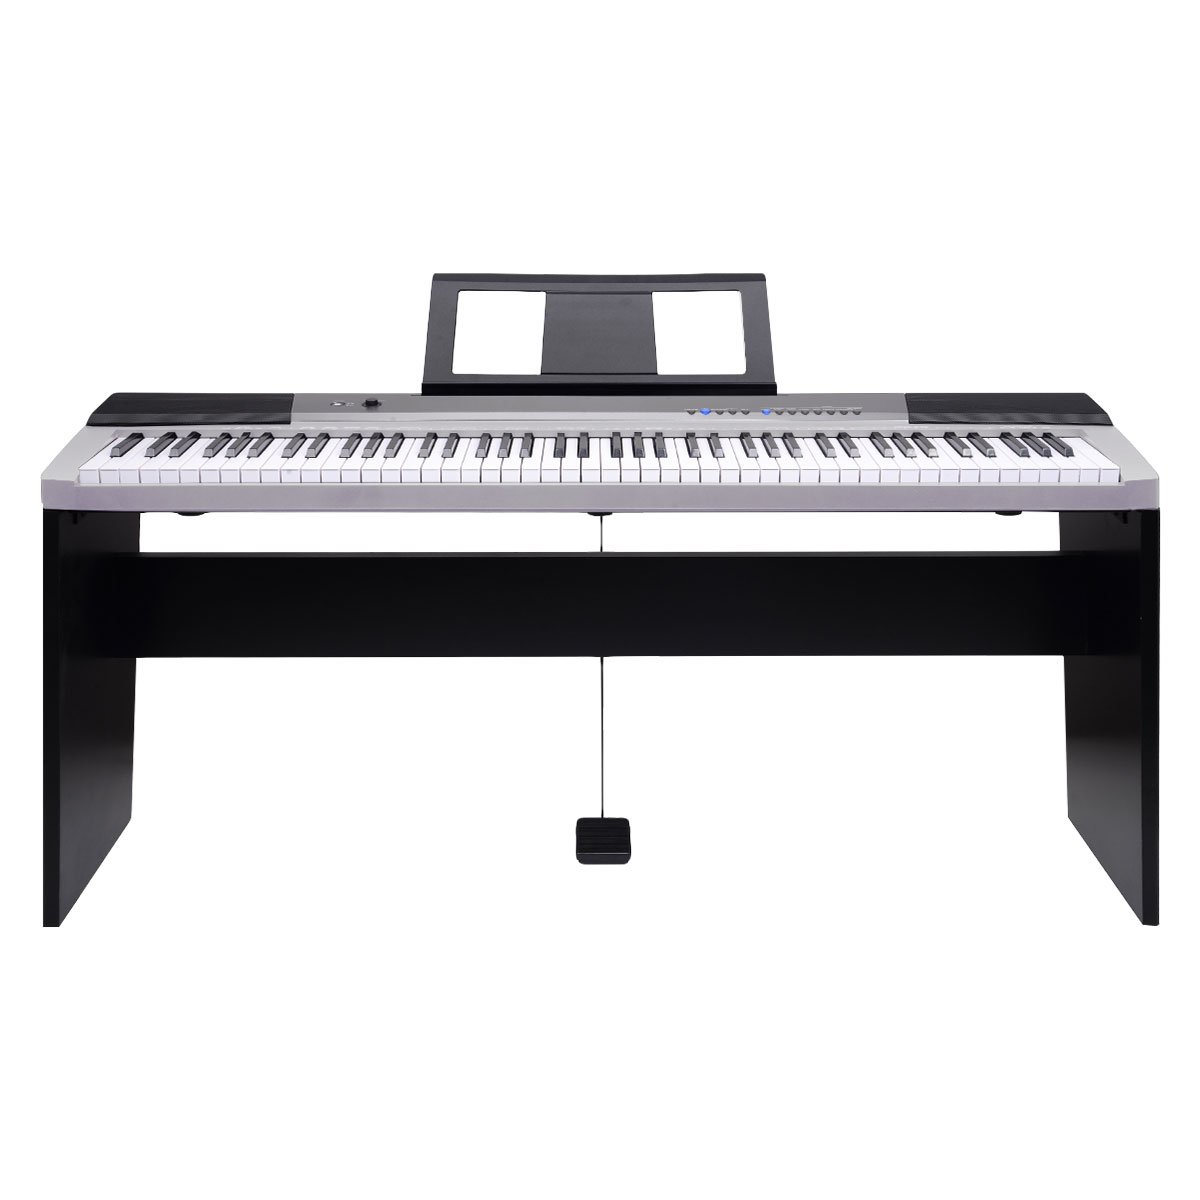 Karrera 88 Keys Electronic Keyboard Piano with Stand Silver 1